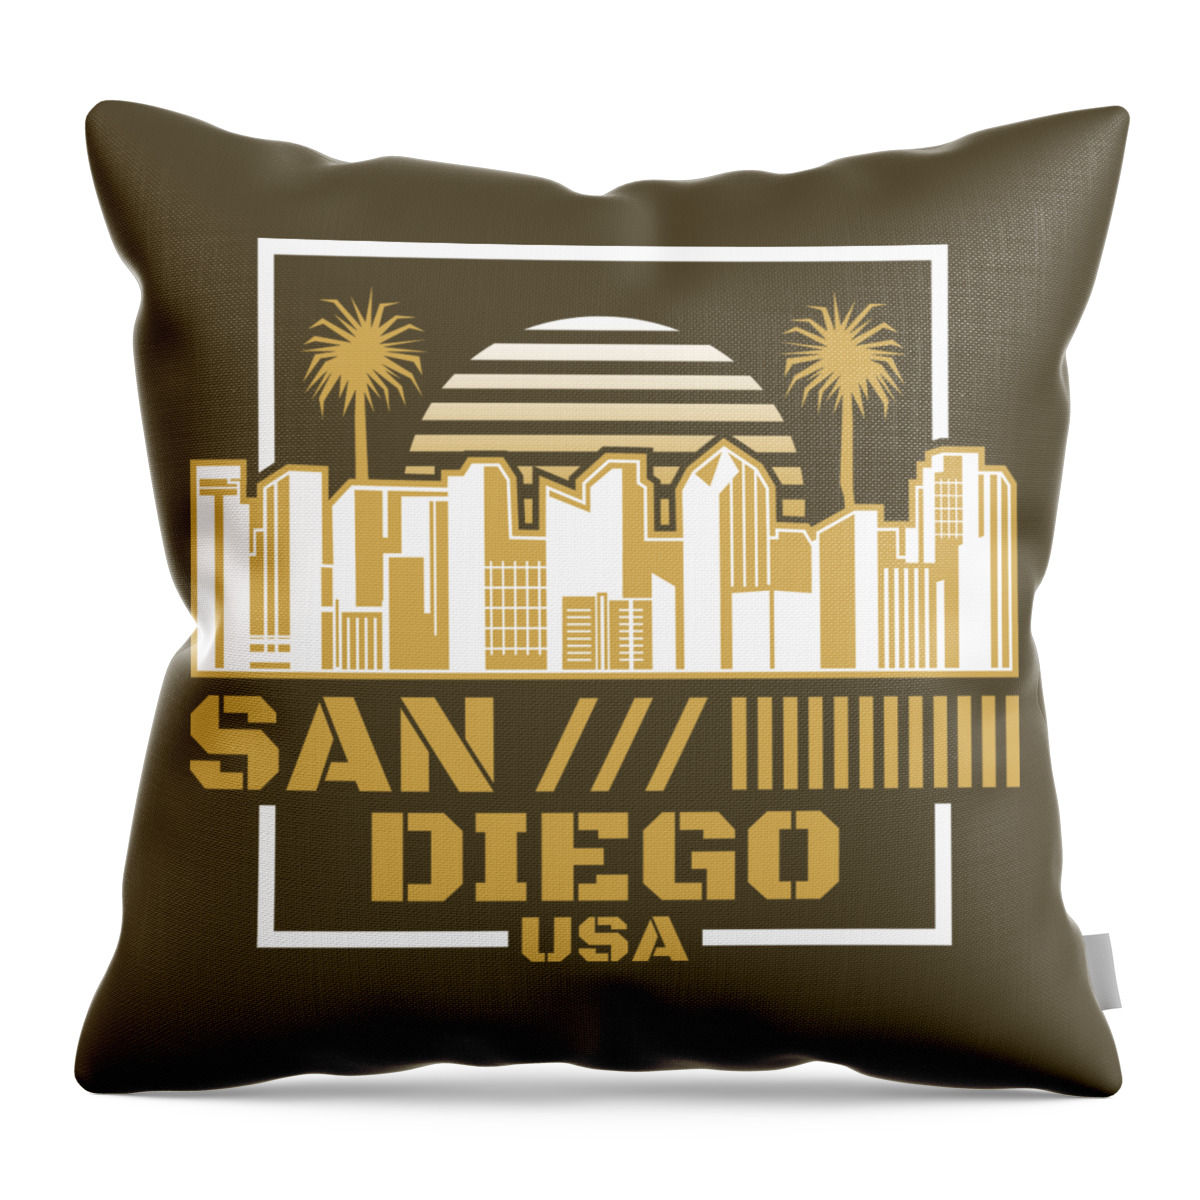 Usa Throw Pillow featuring the digital art San Diego USA by Sambel Pedes